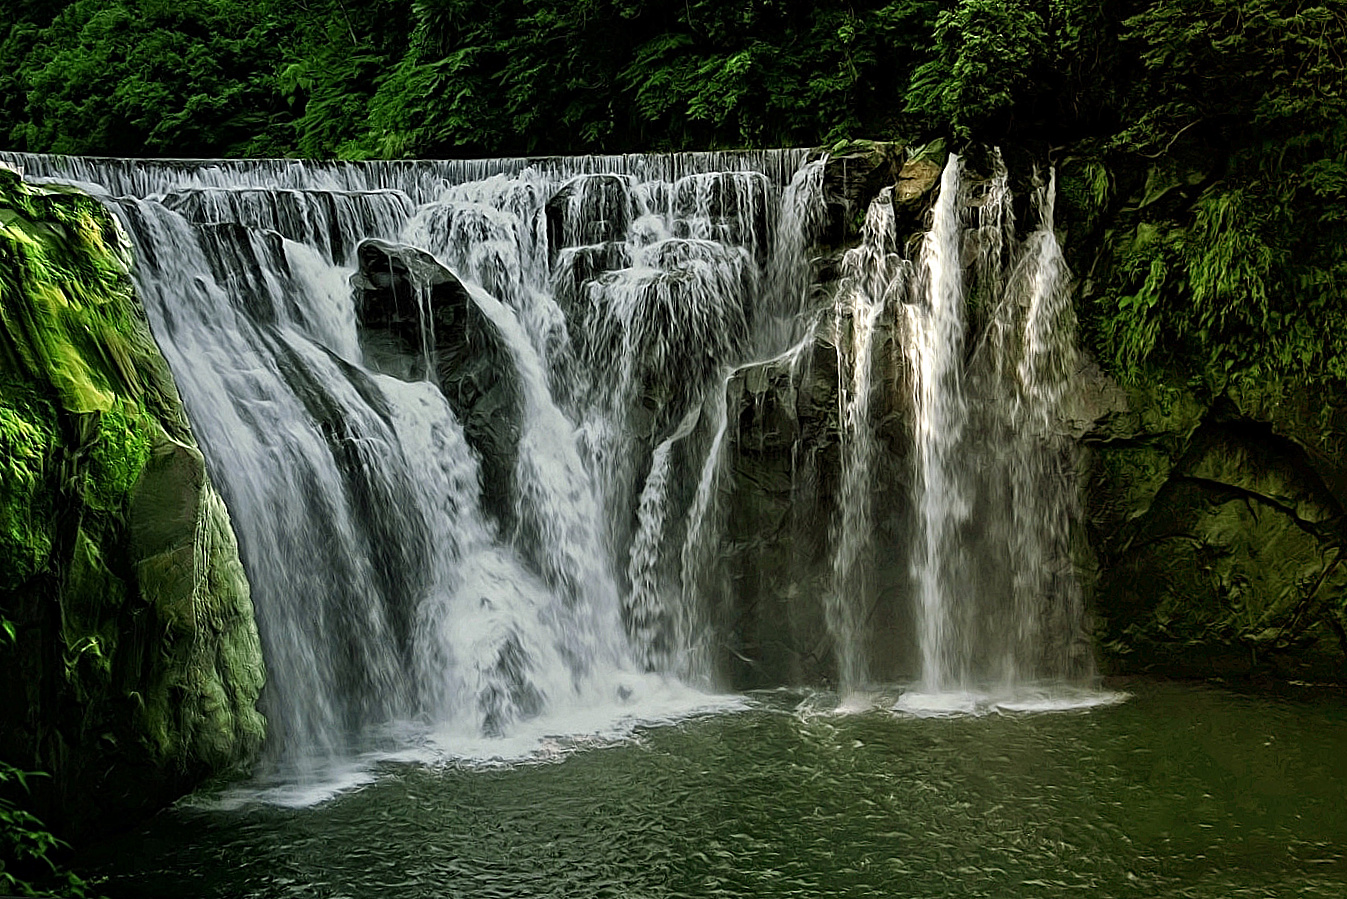 Wasserfall & Natur pur